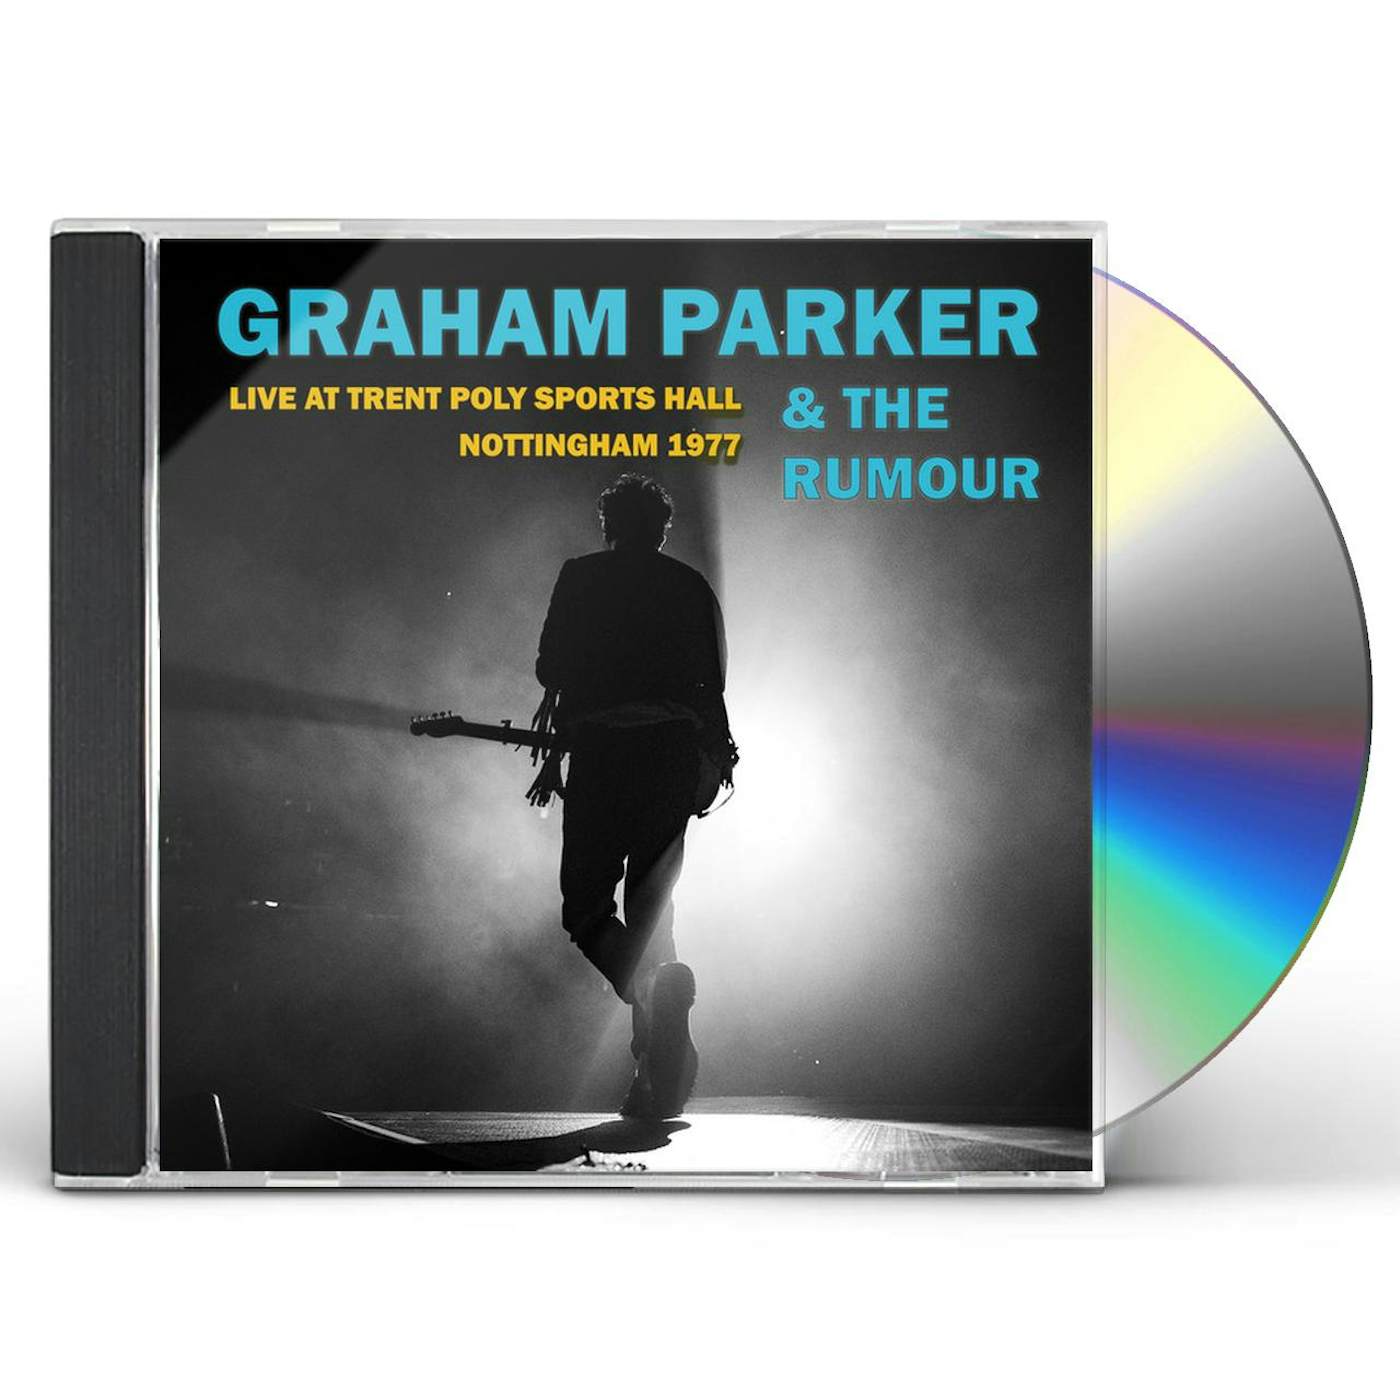 Graham Parker LIVE AT TRENT POLY SPORTS HALL: NOTTINGHAM 1977 CD